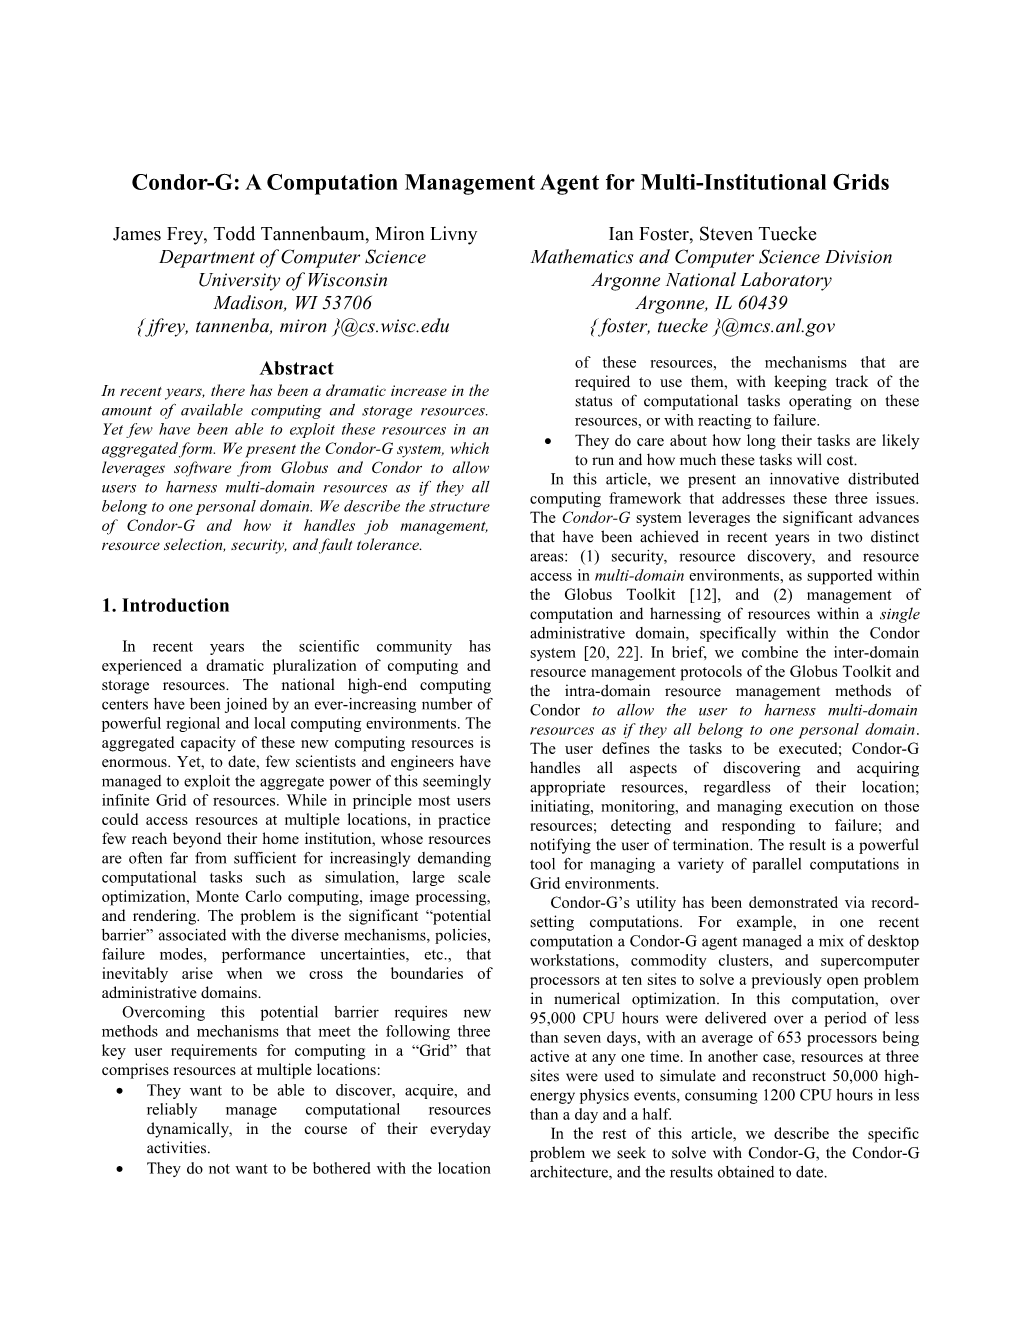 Condor-G: a Computation Management Agent for Multi-Institutional Grids